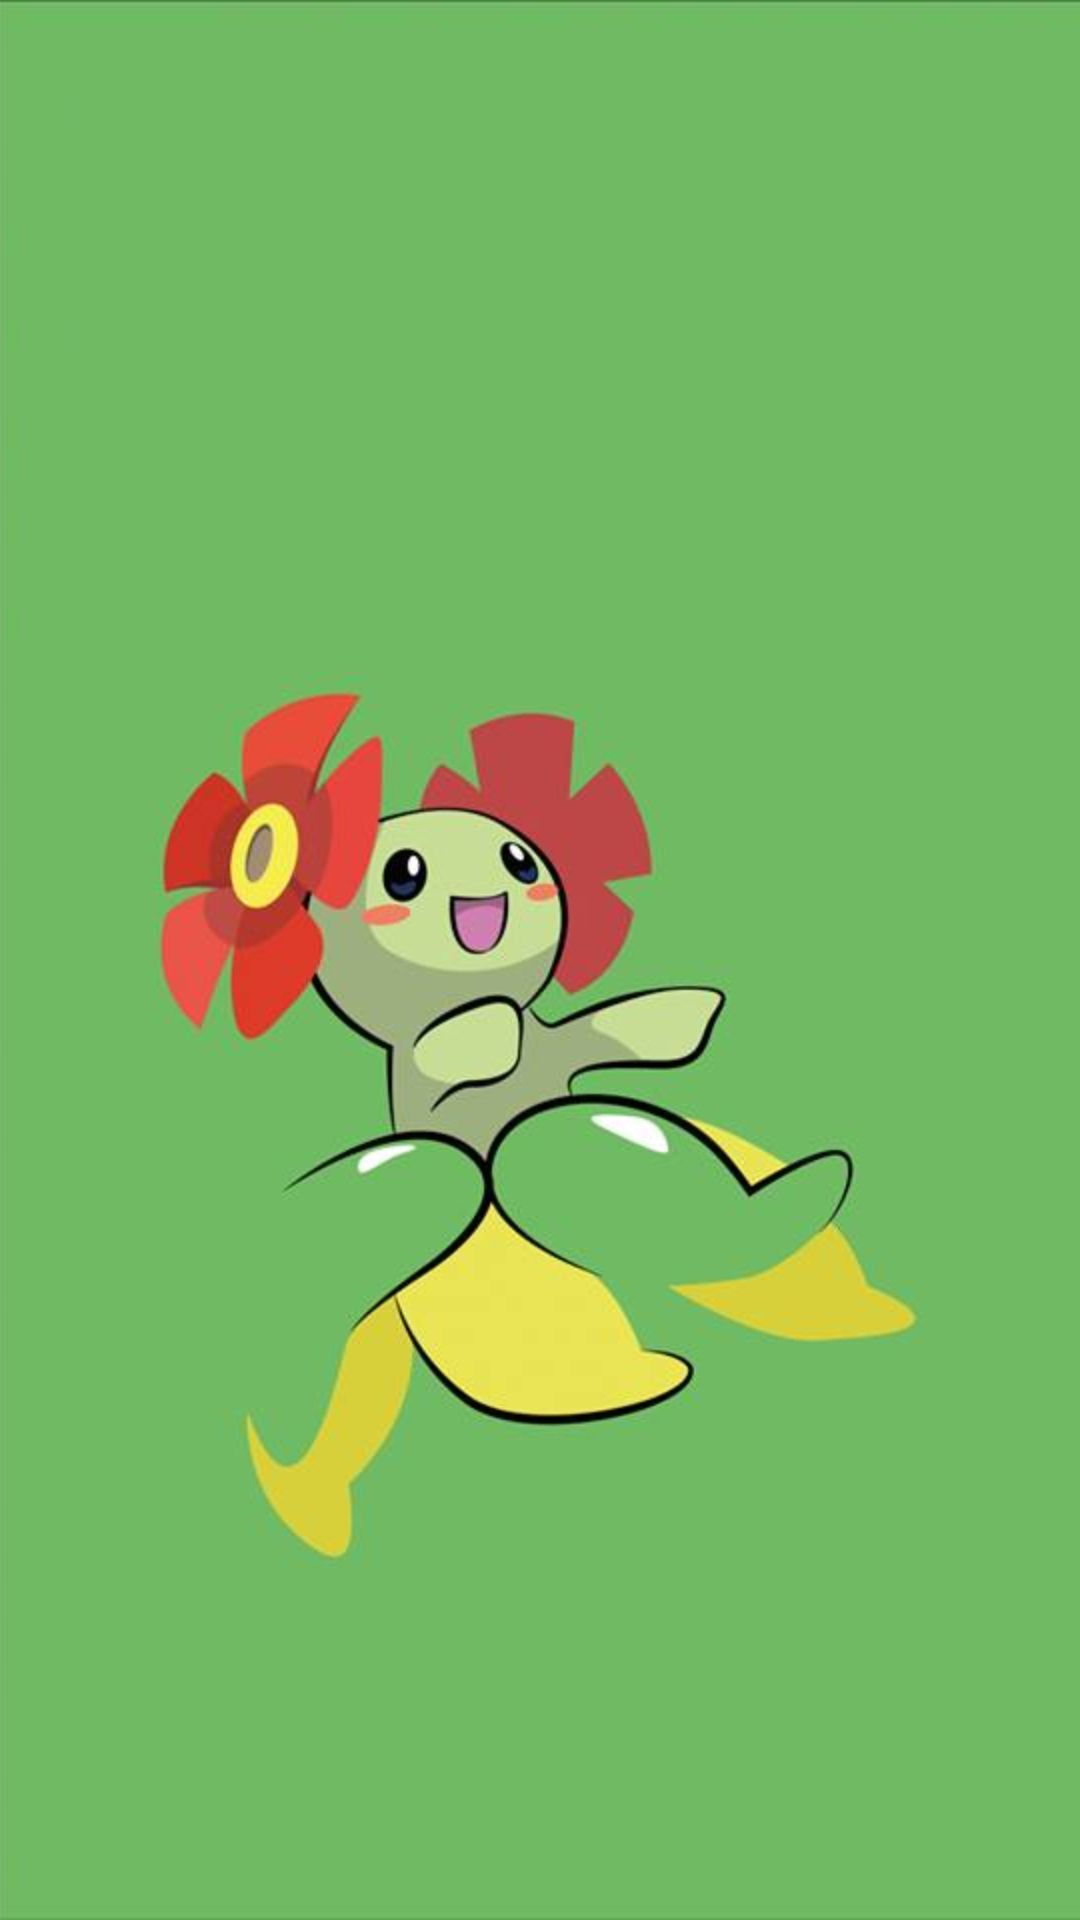 pokemon iphone wallpaper,green,cartoon,animated cartoon,illustration,leaf